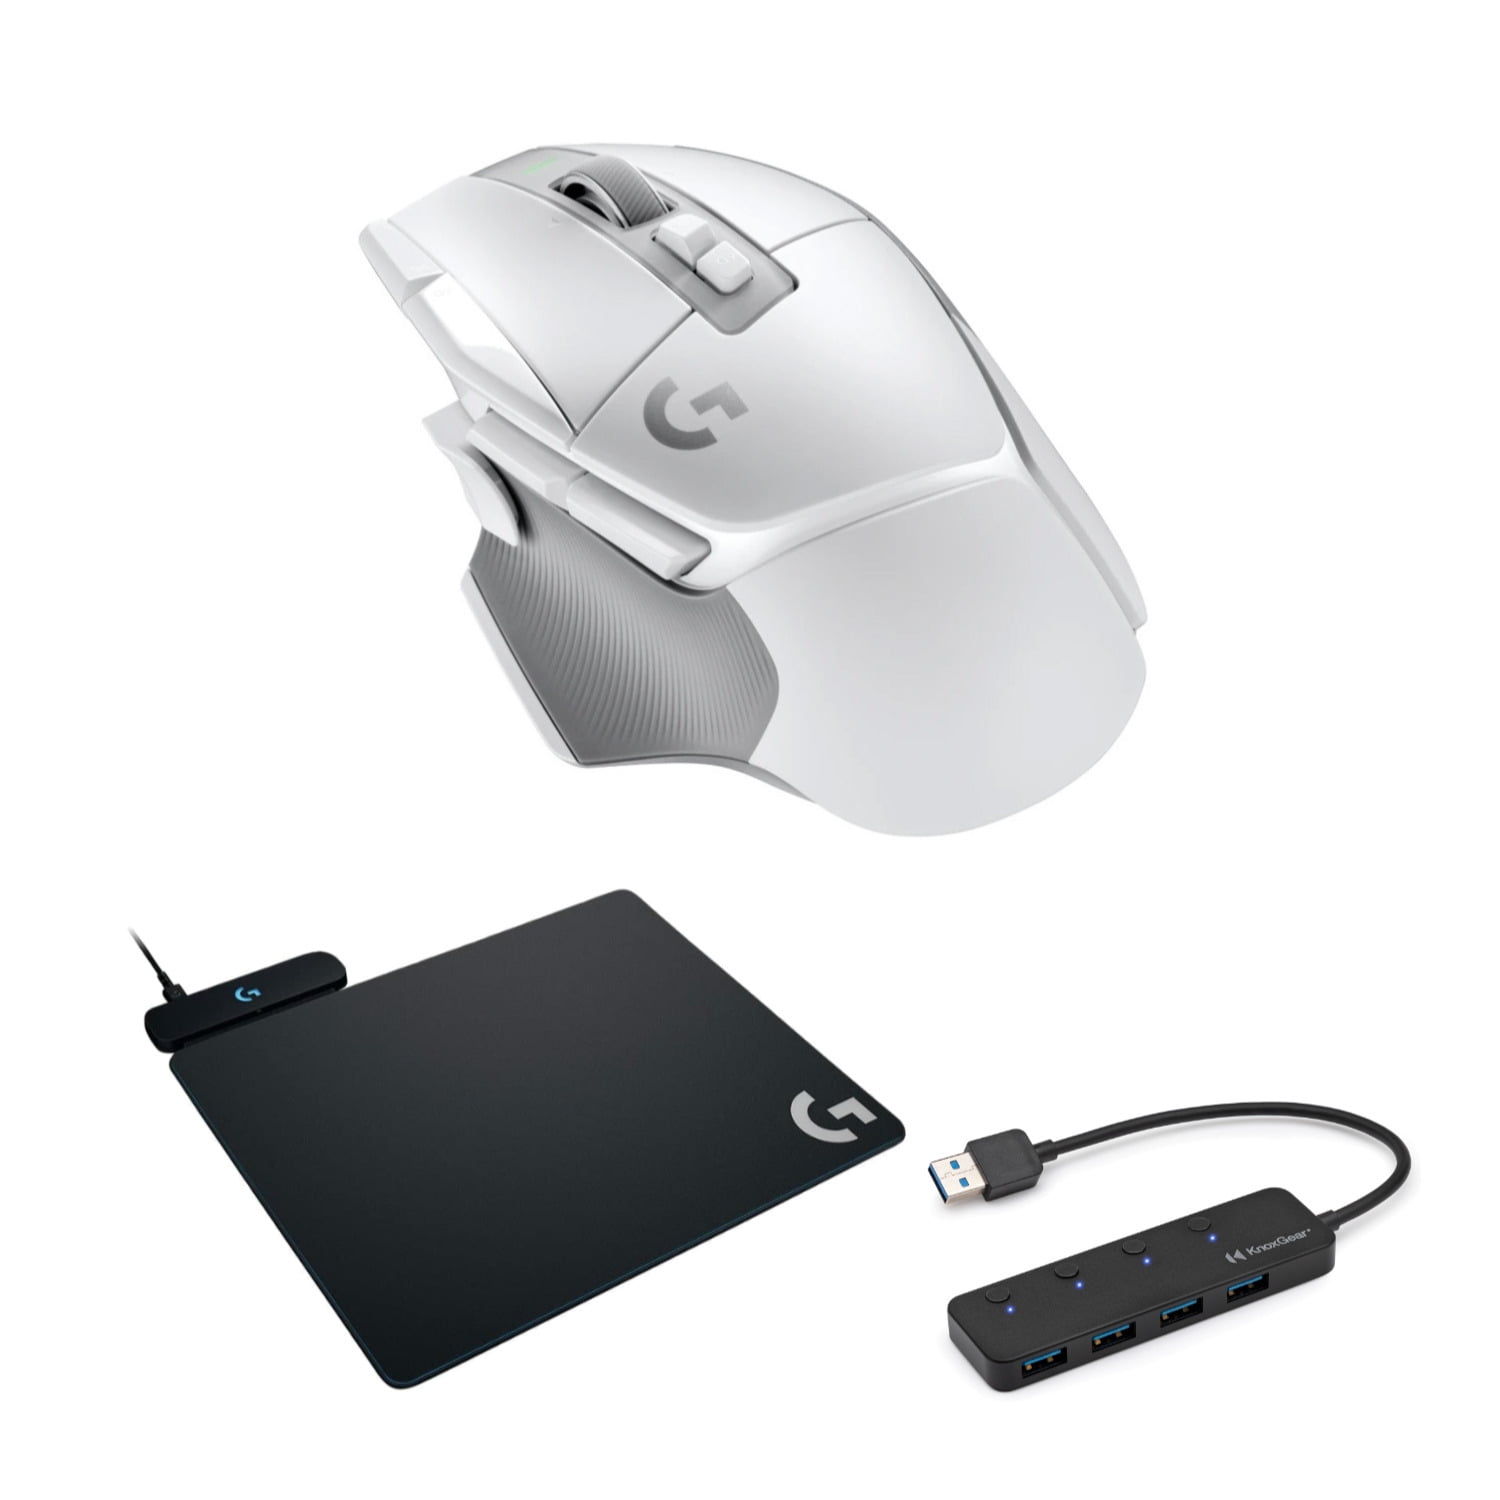 Logitech - G502 X PLUS LIGHTSPEED Wireless Gaming Mouse with HERO 25K  Sensor